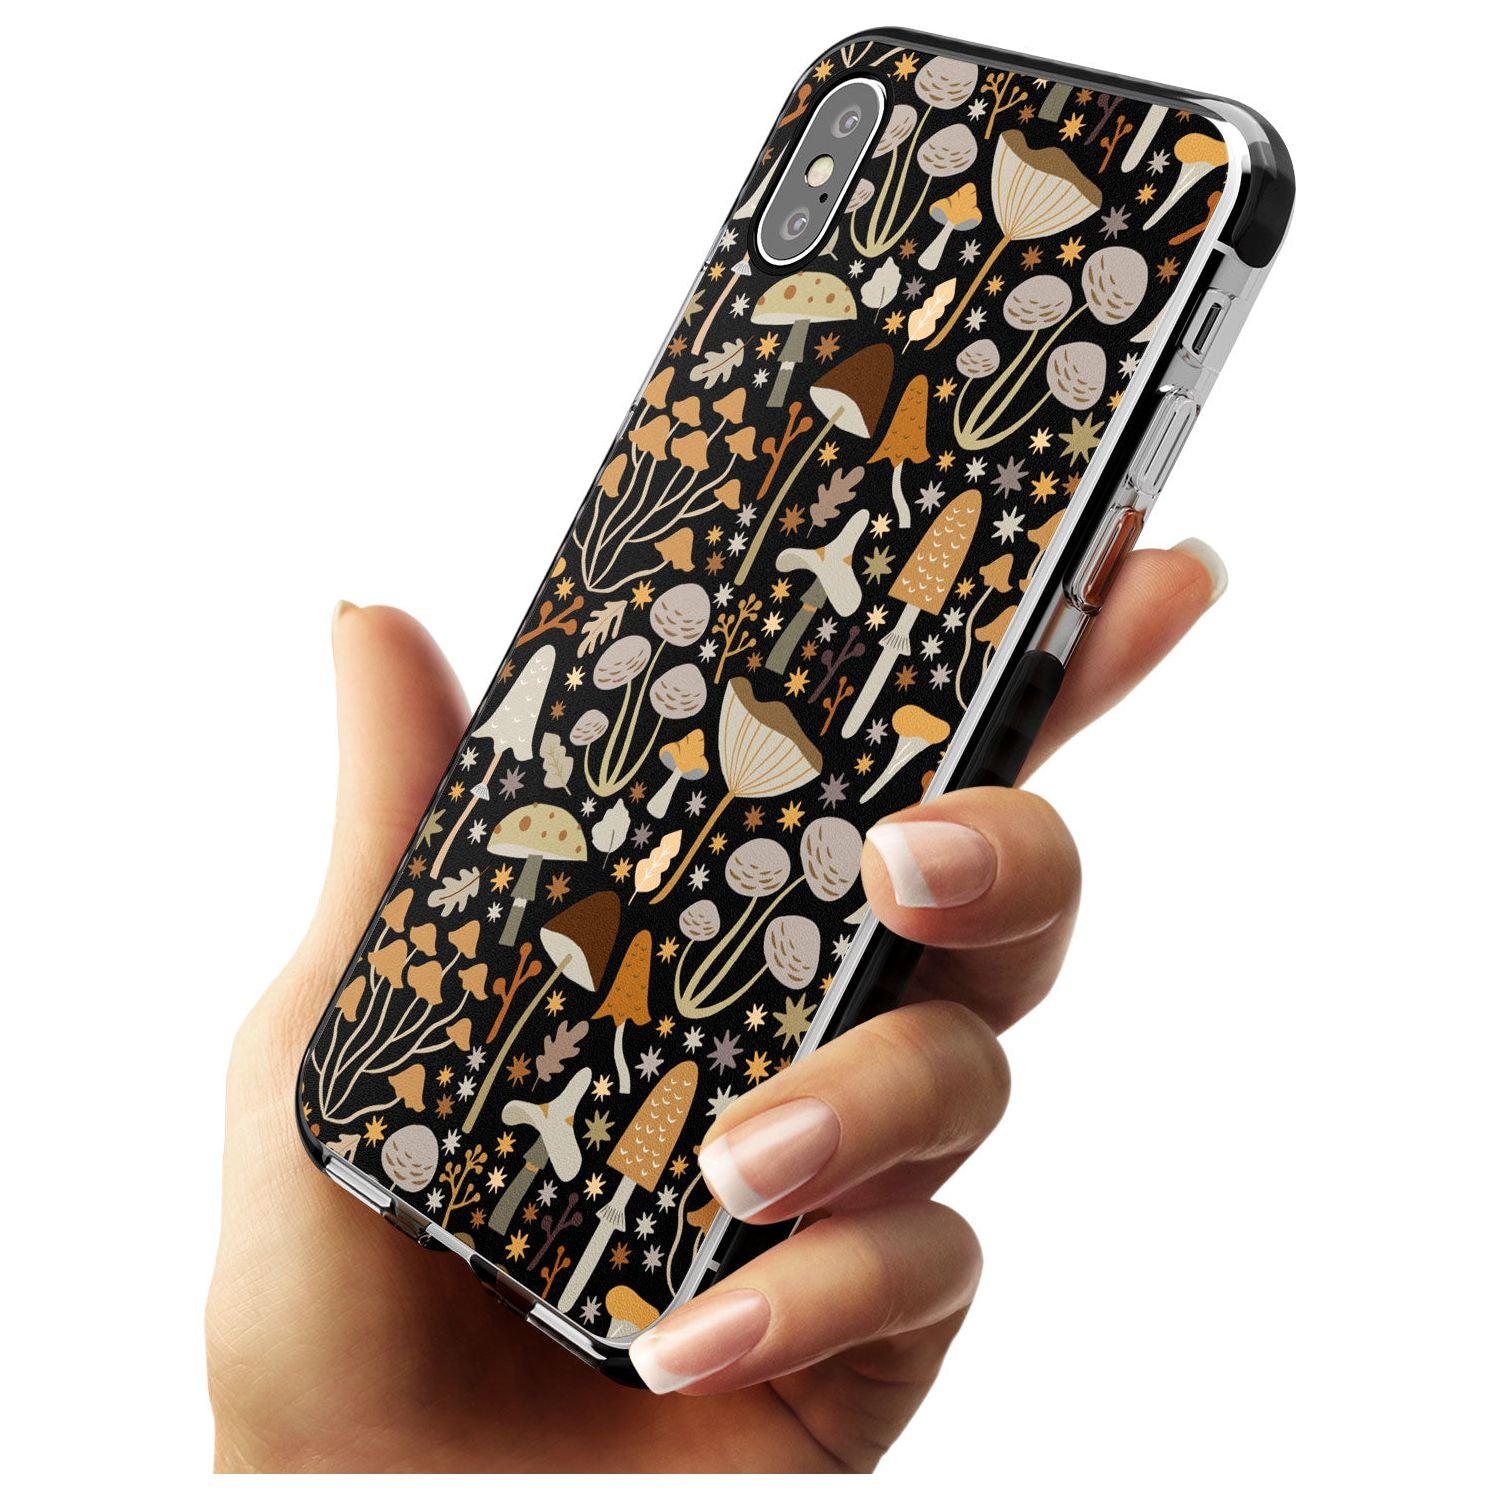 Sentimental Mushrooms Pattern Black Impact Phone Case for iPhone X XS Max XR